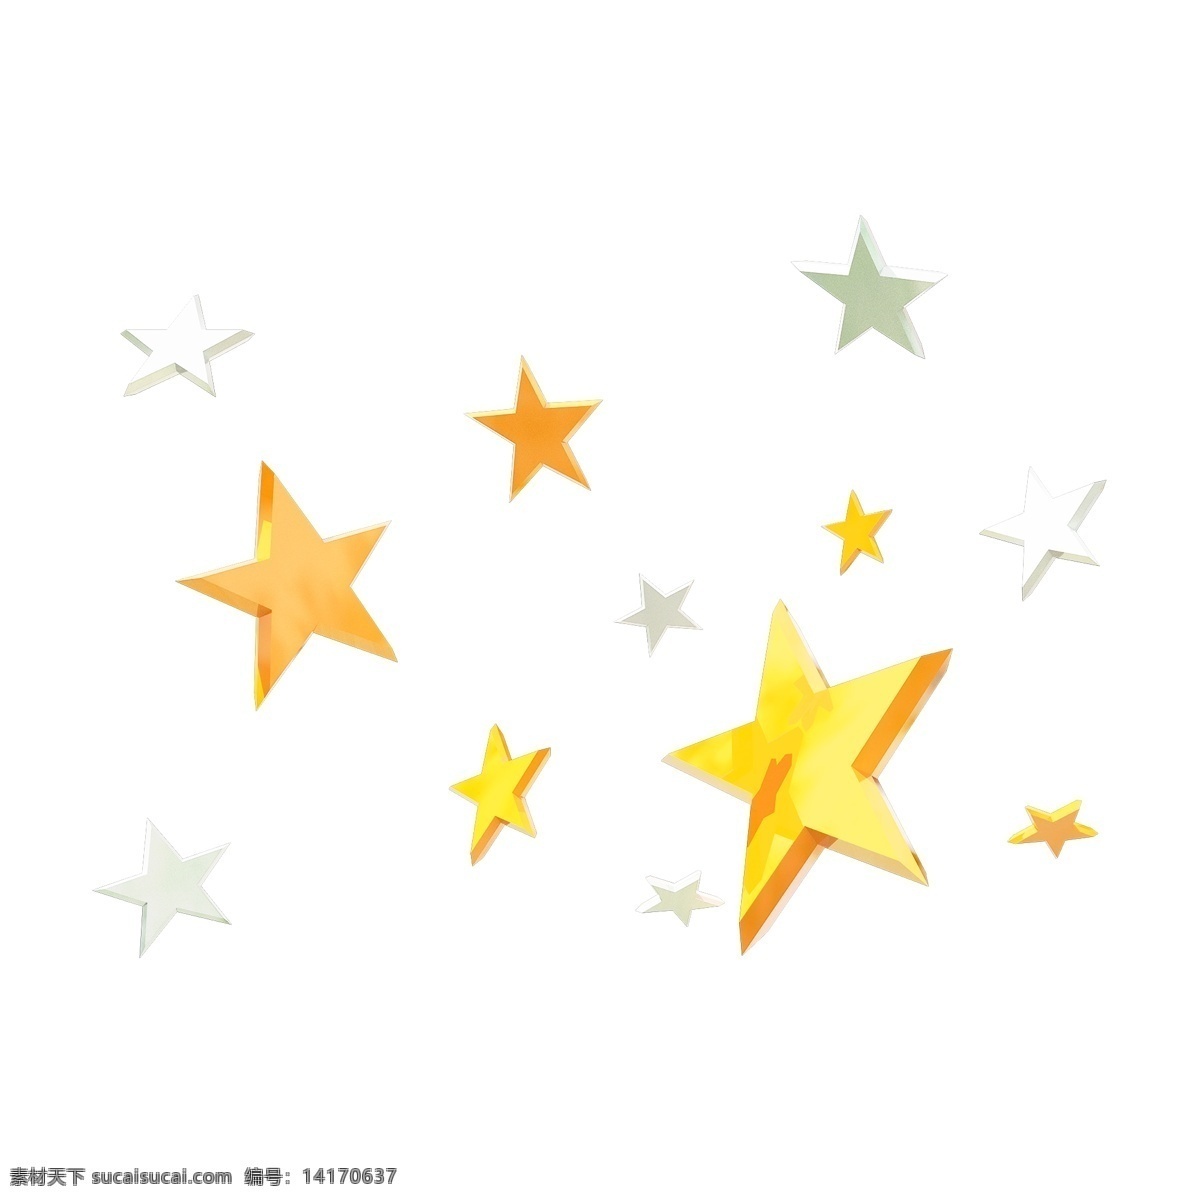 c4d 金色 白色 可爱 星星 悬浮 悬浮物 金色星星 白色星星 装饰物 唯美风 少女风 童年 卡通